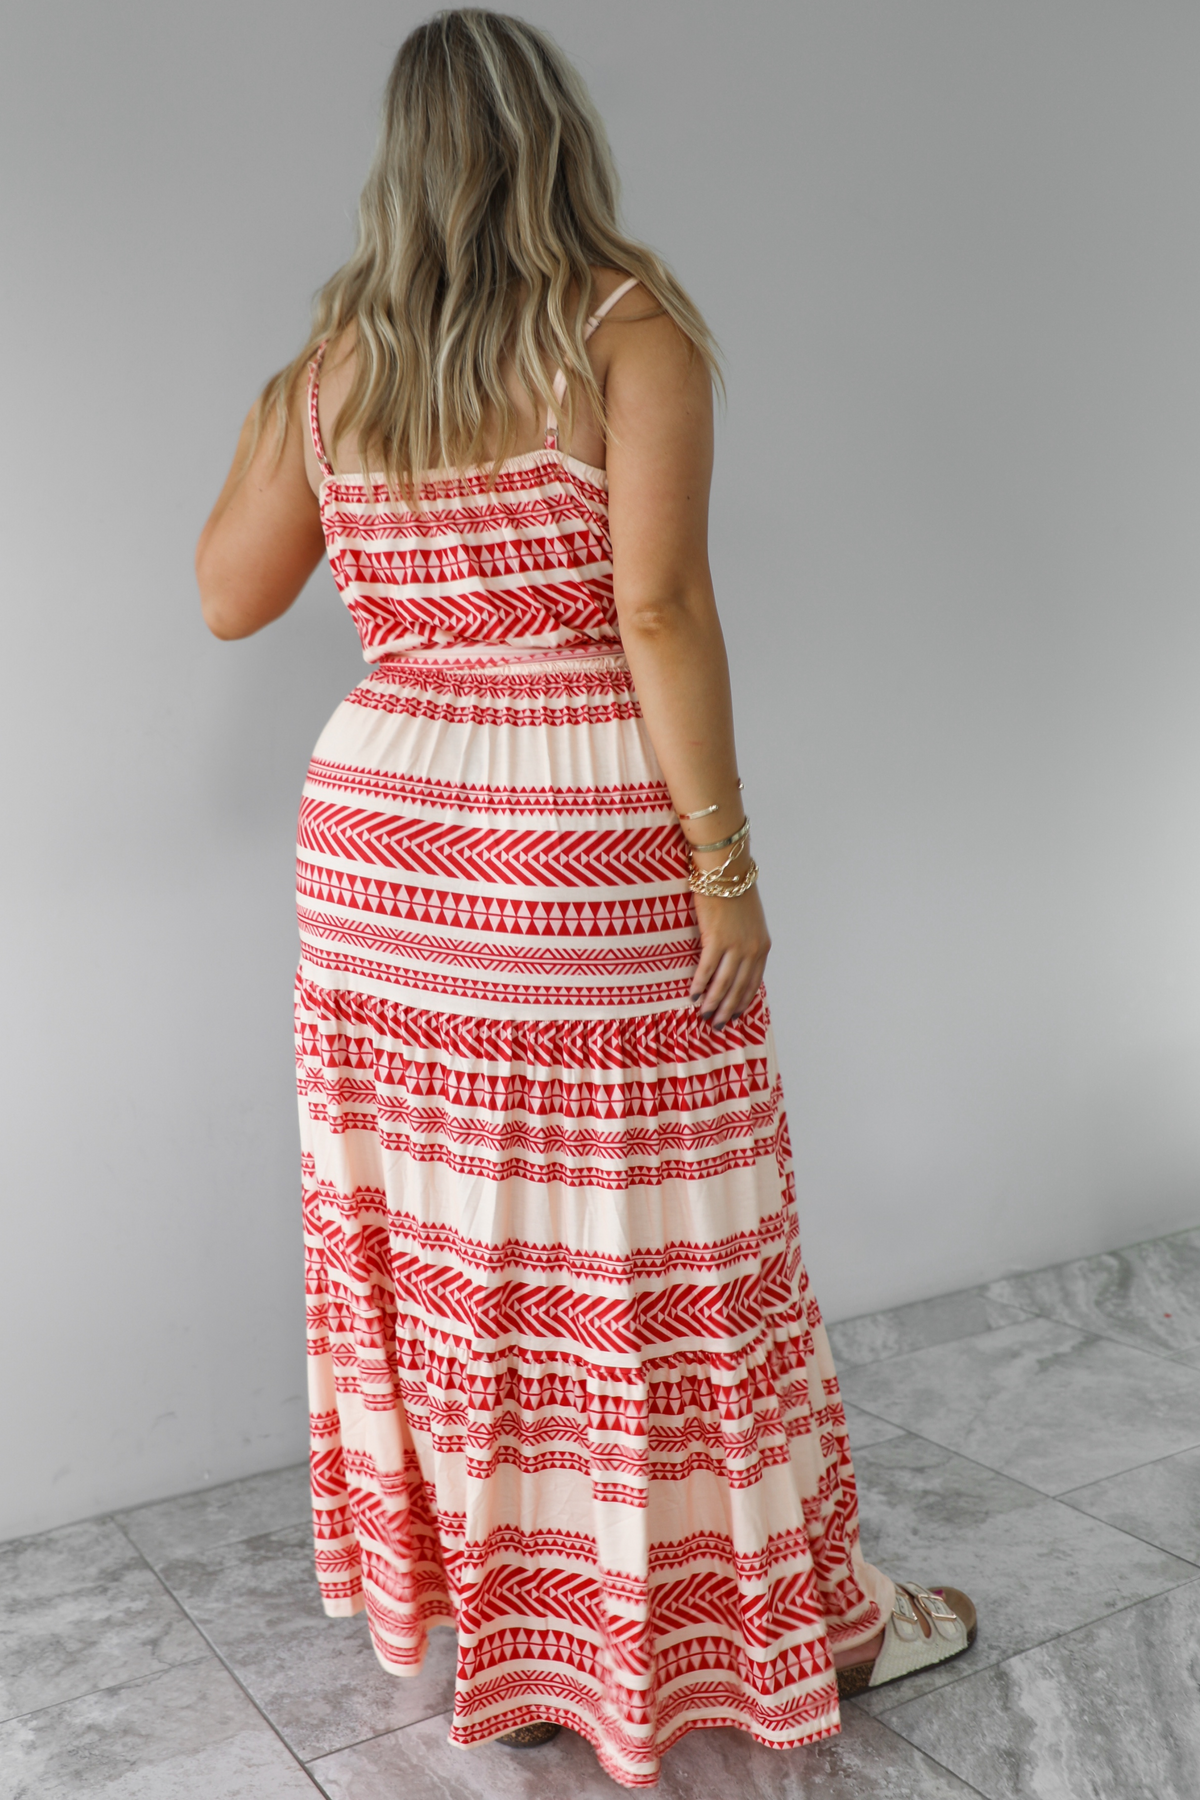 Printed Maxi Dress: Coral Red/Cream